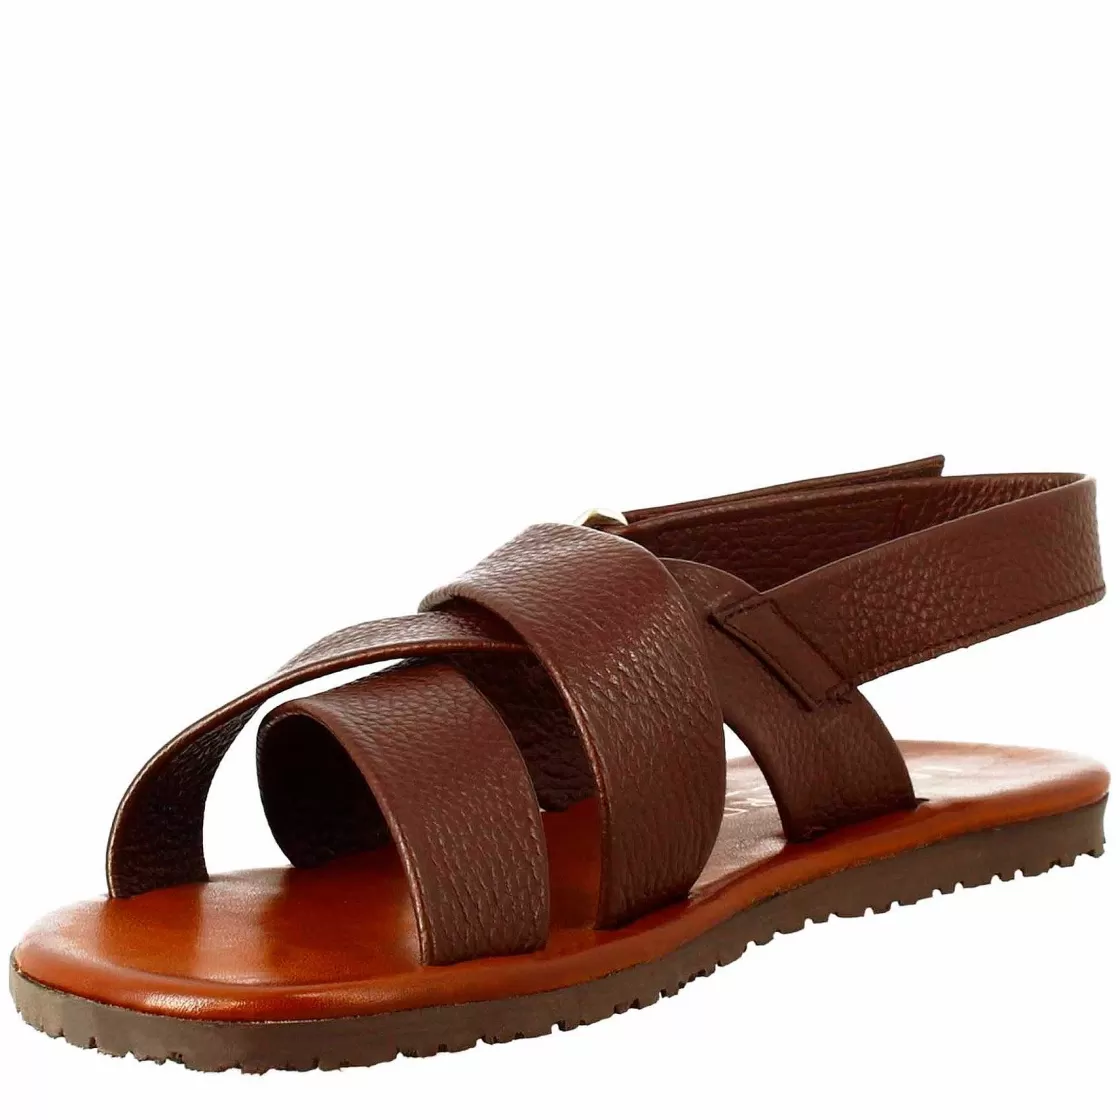 Leonardo Handmade Men'S Sandals In Brown Leather With Velcro Closure New